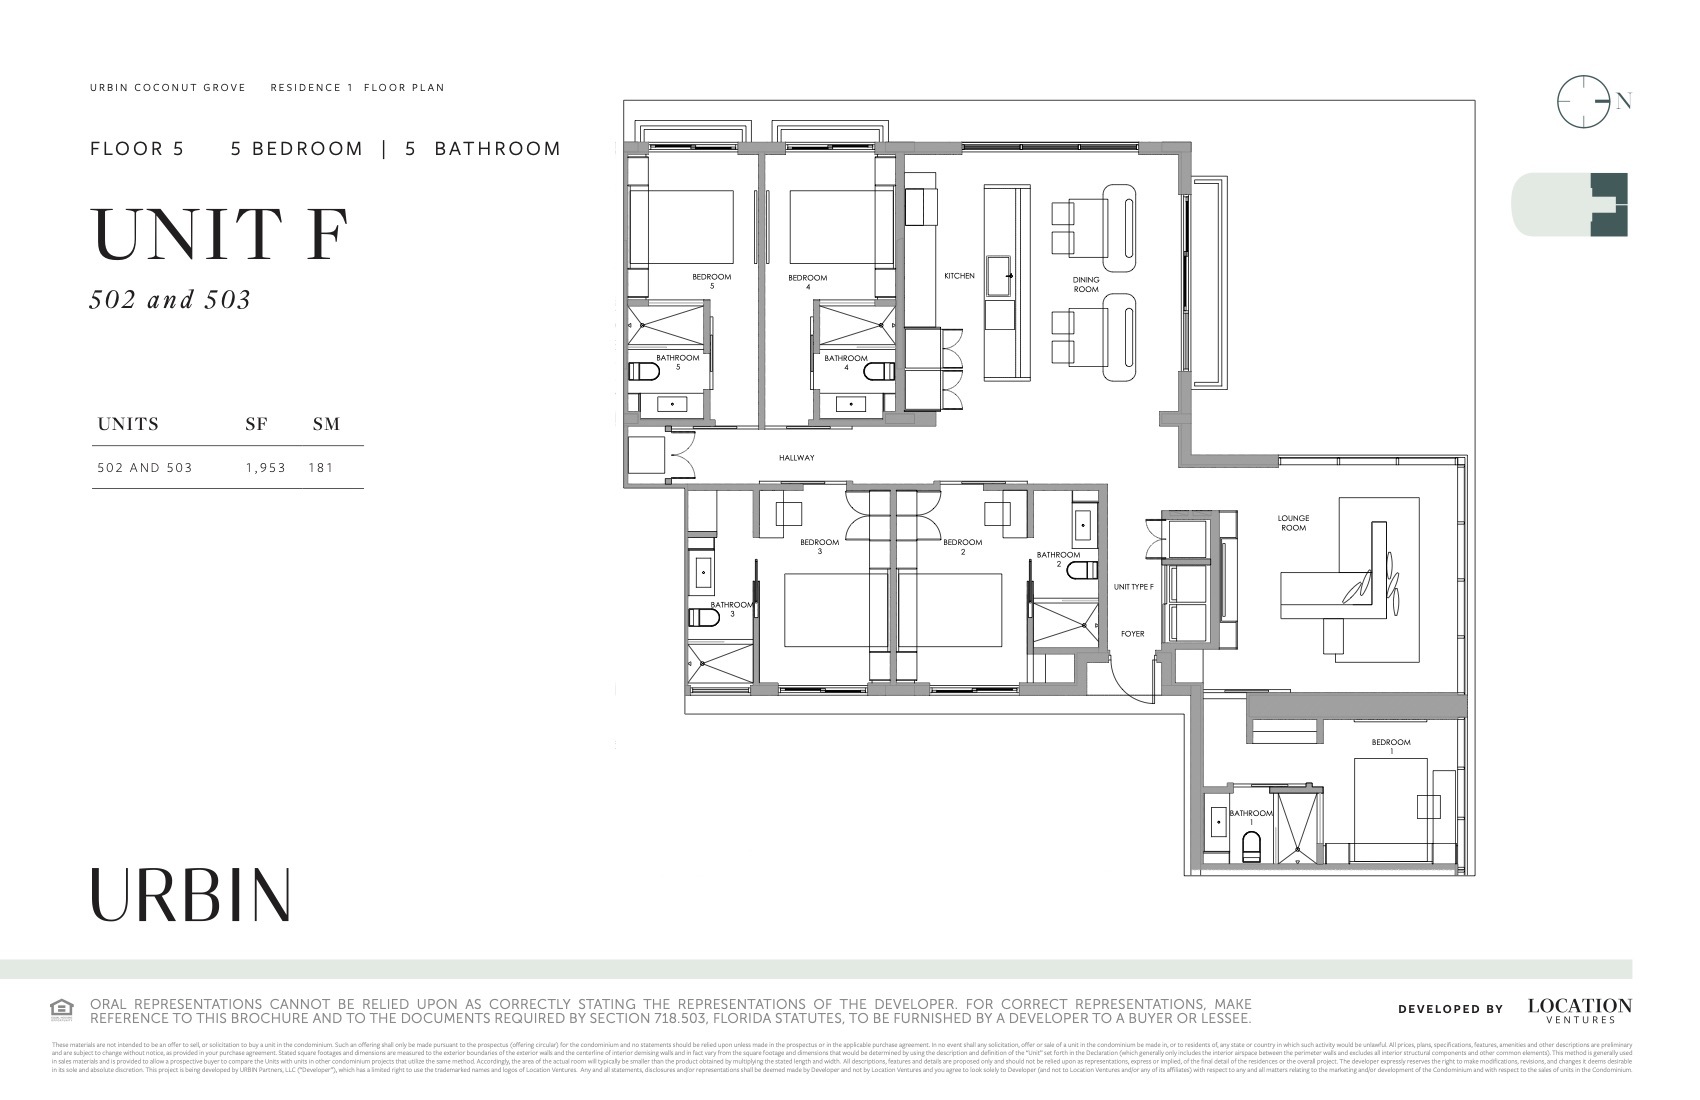 Floor Plan for Urbin Coconut Grove Floorplans, Unit F